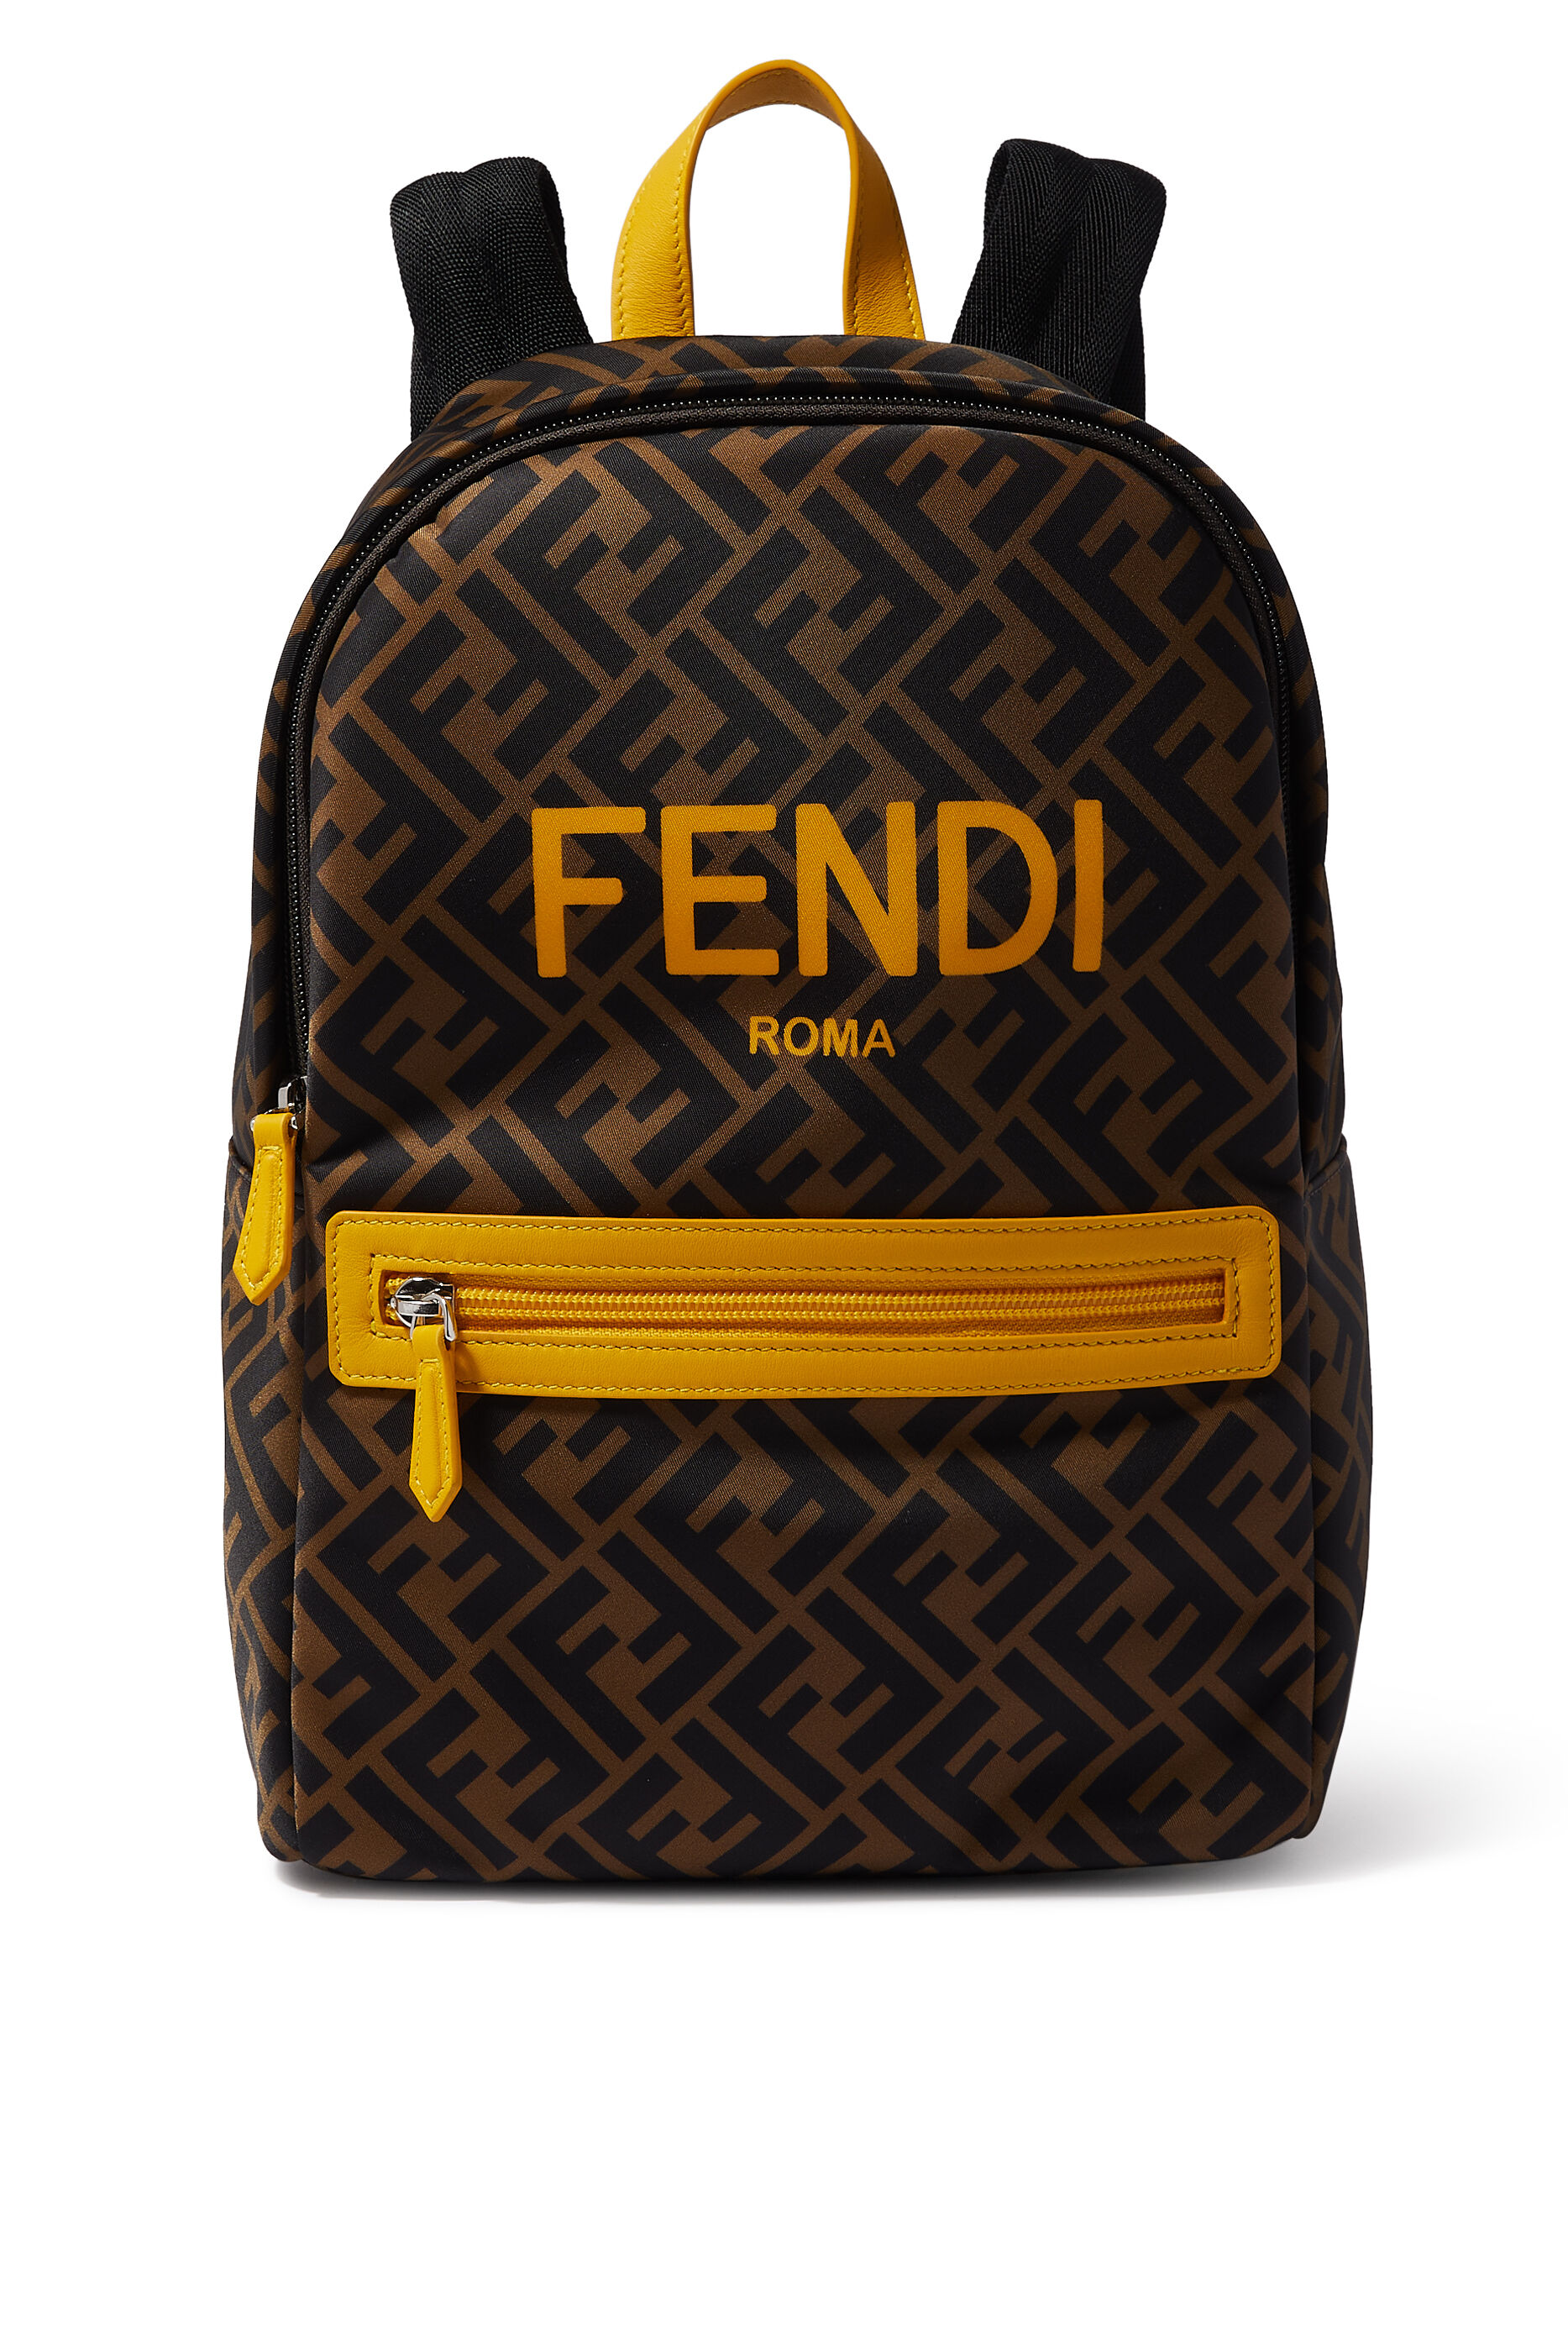 FF motif backpack | FENDI | Eraldo.com